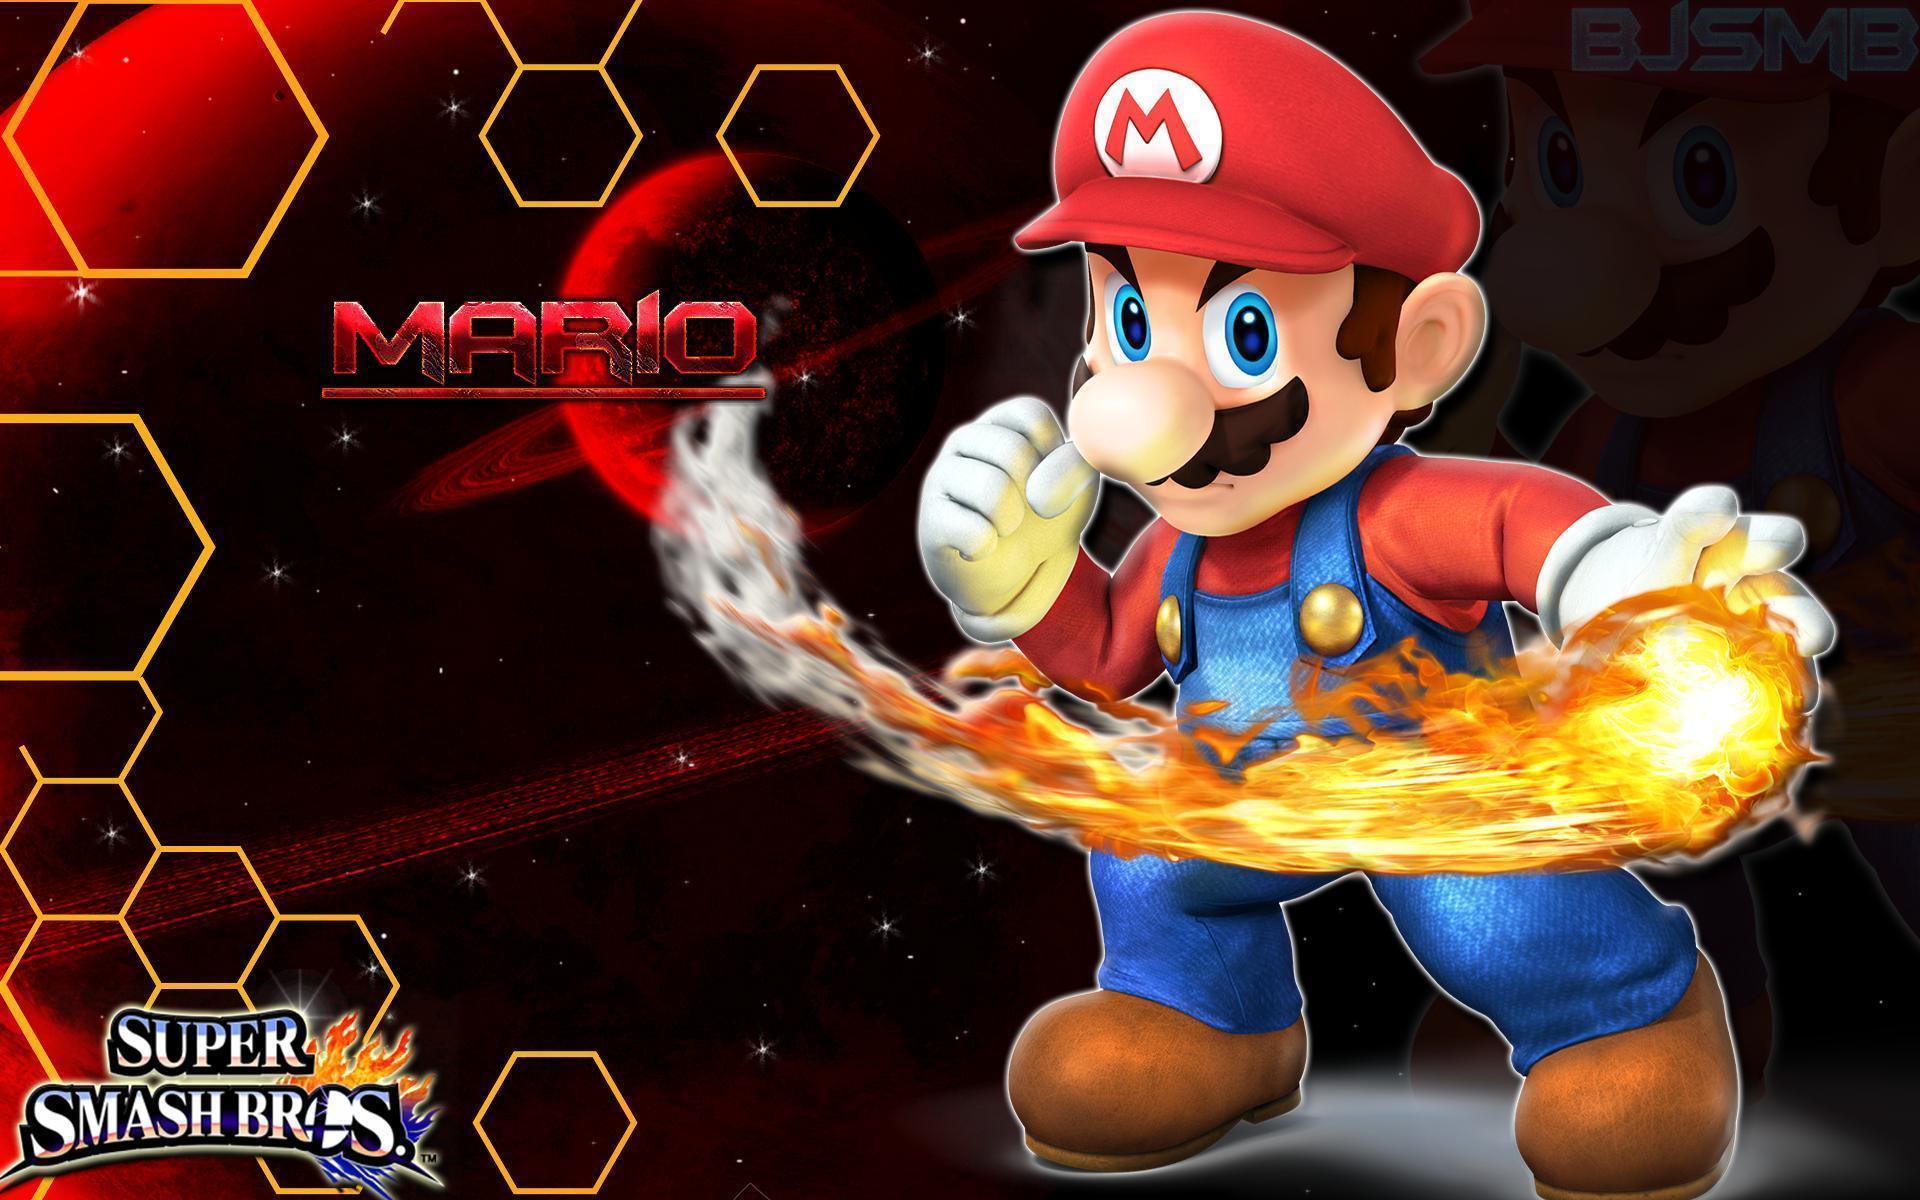 Mario Smash Bros. 4 Wallpaper Background